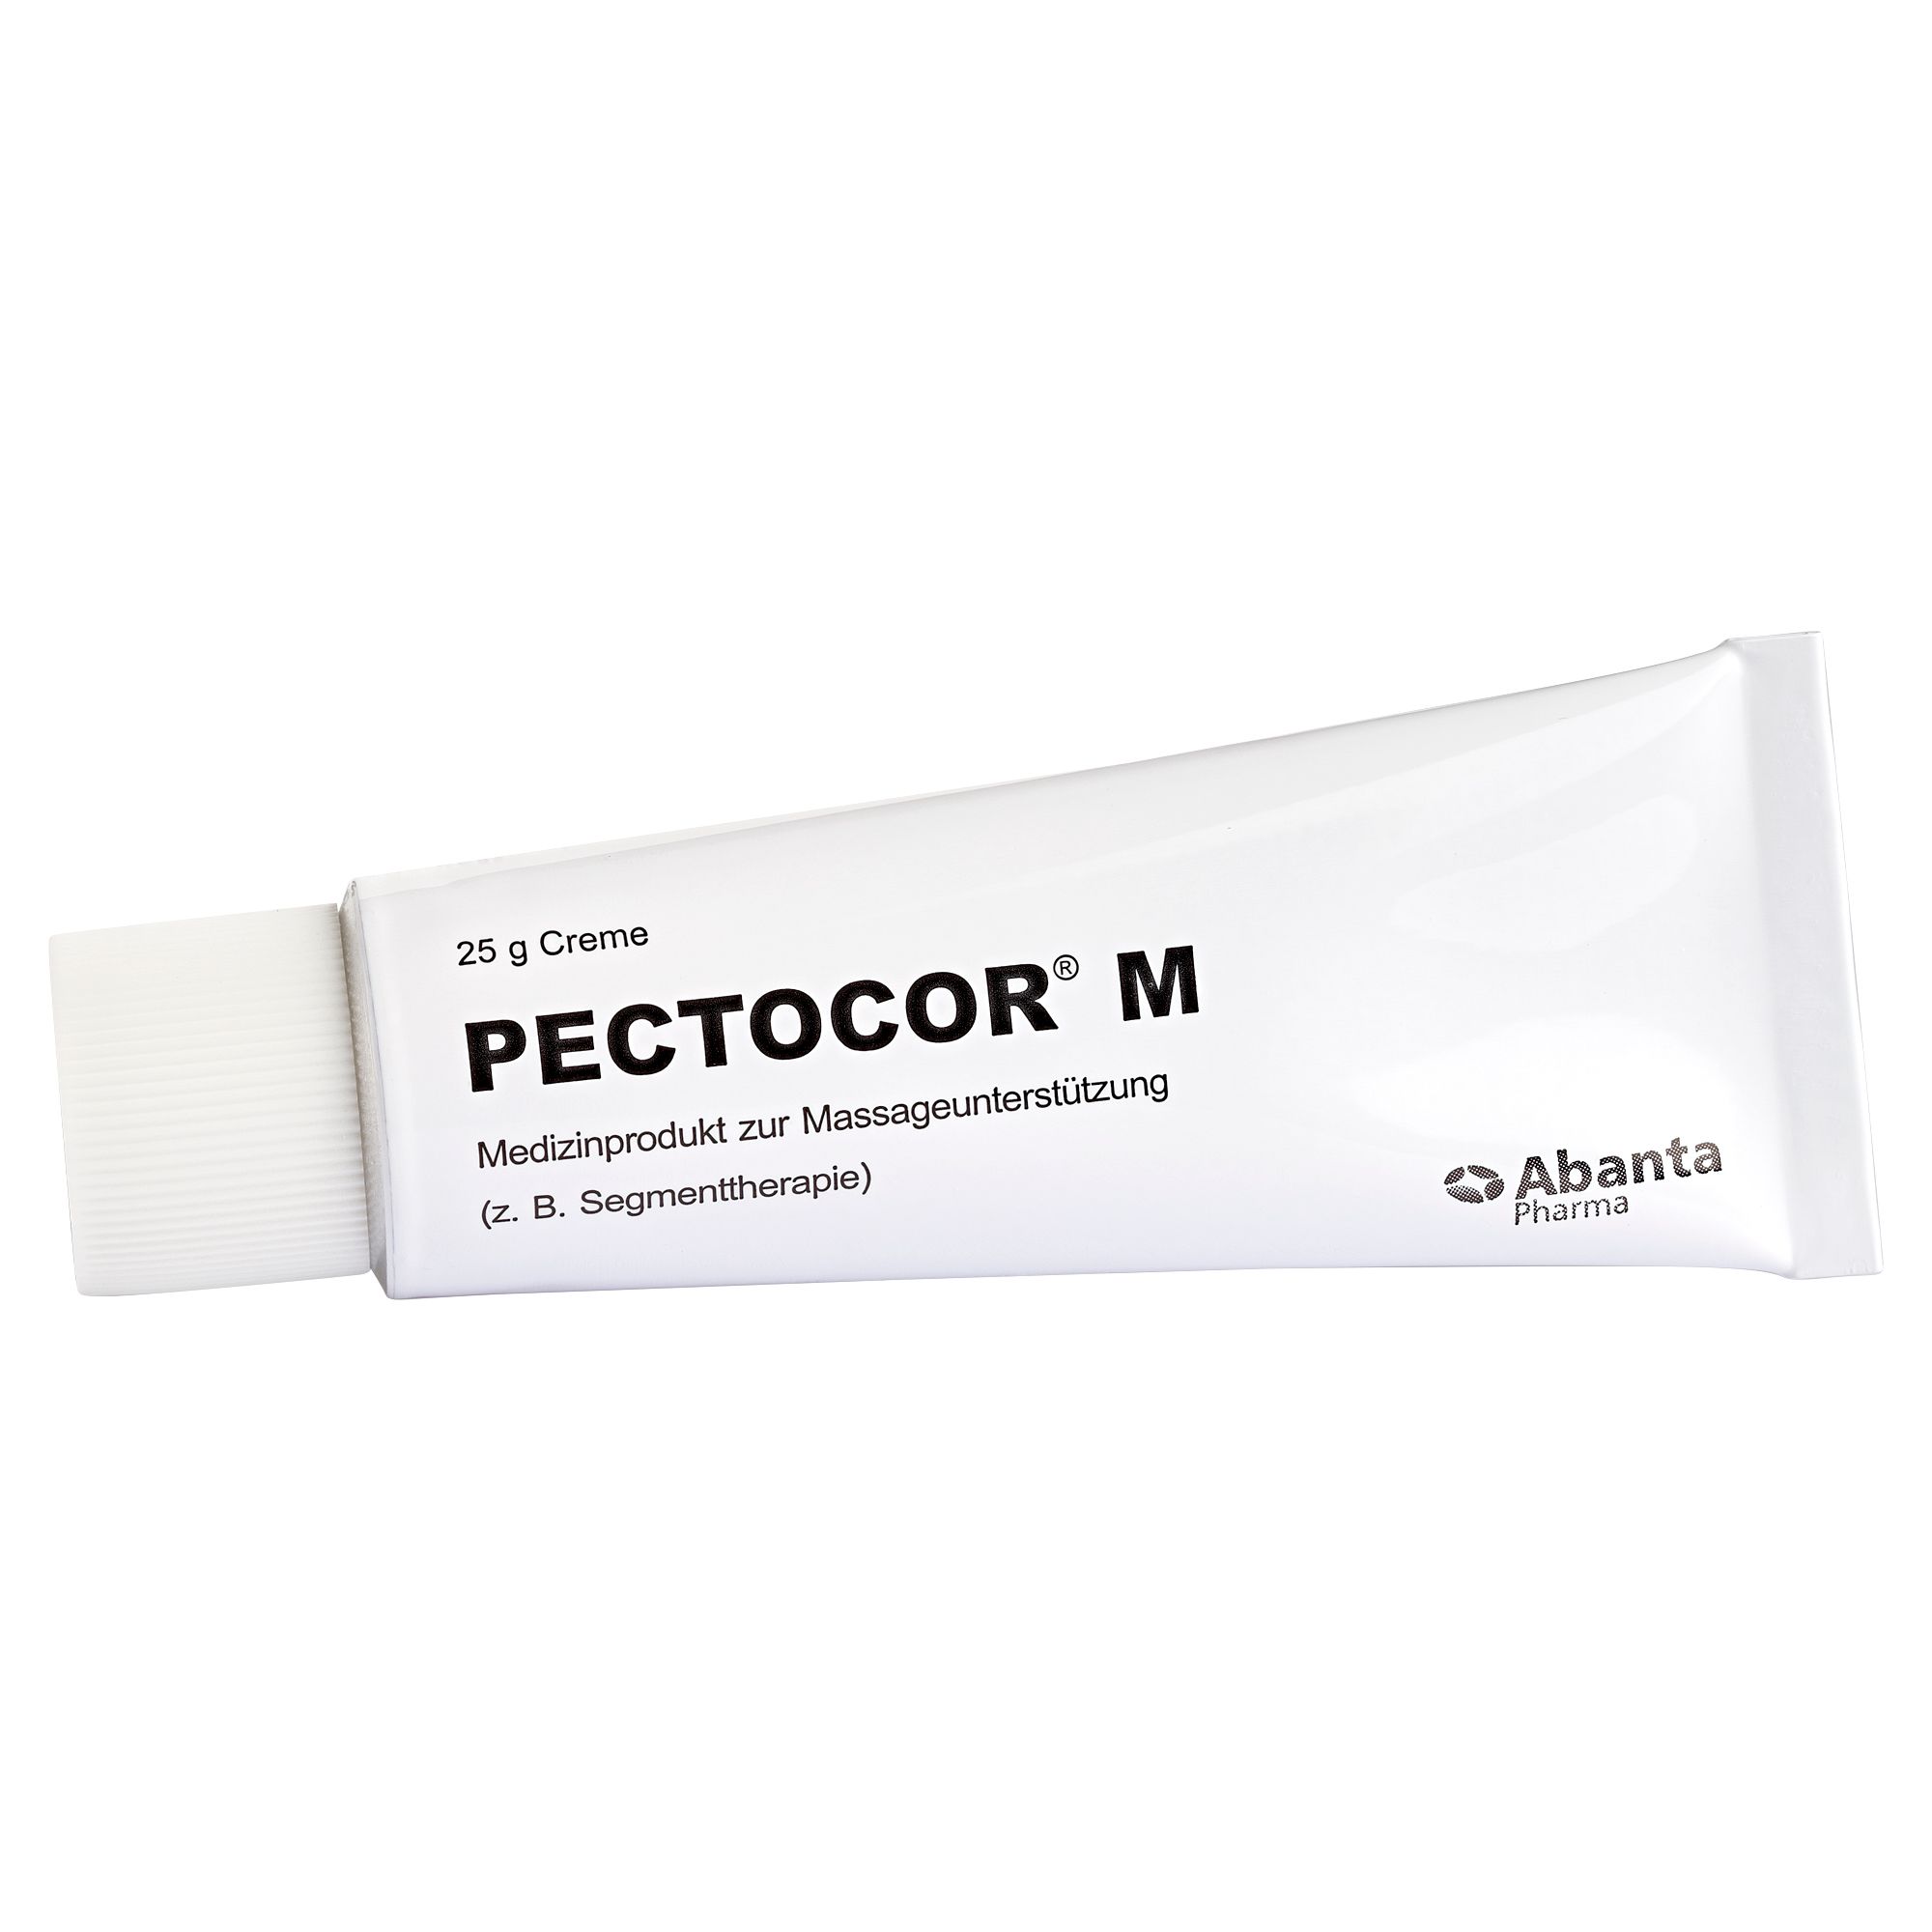 Pectocor® M